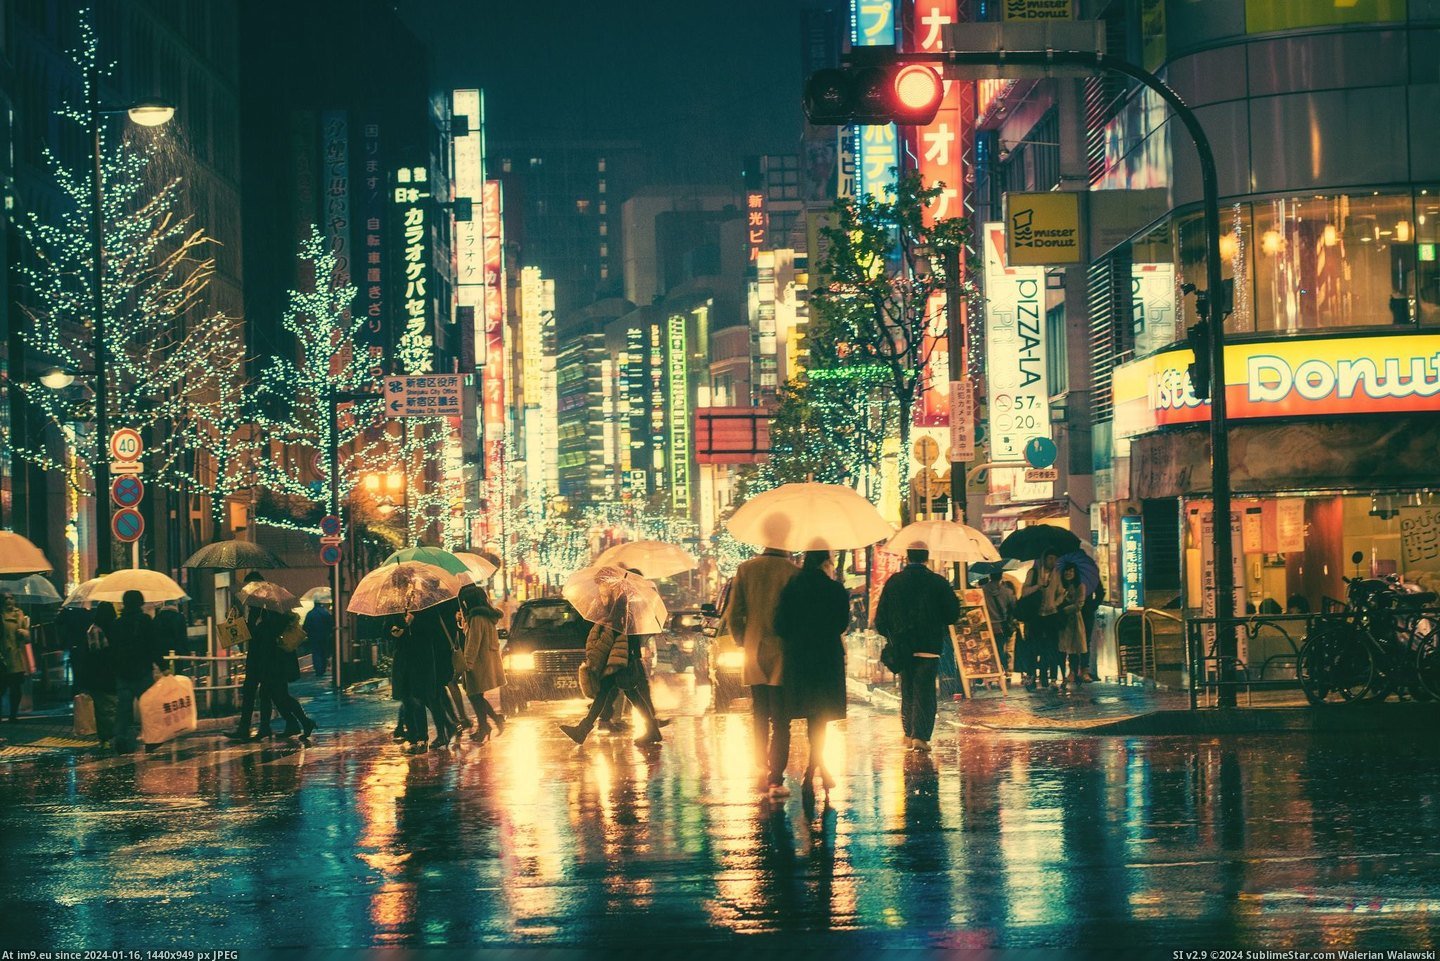 #Night #Rainy #Colorful #Tokyo [Pics] A colorful rainy night in Tokyo Pic. (Изображение из альбом My r/PICS favs))